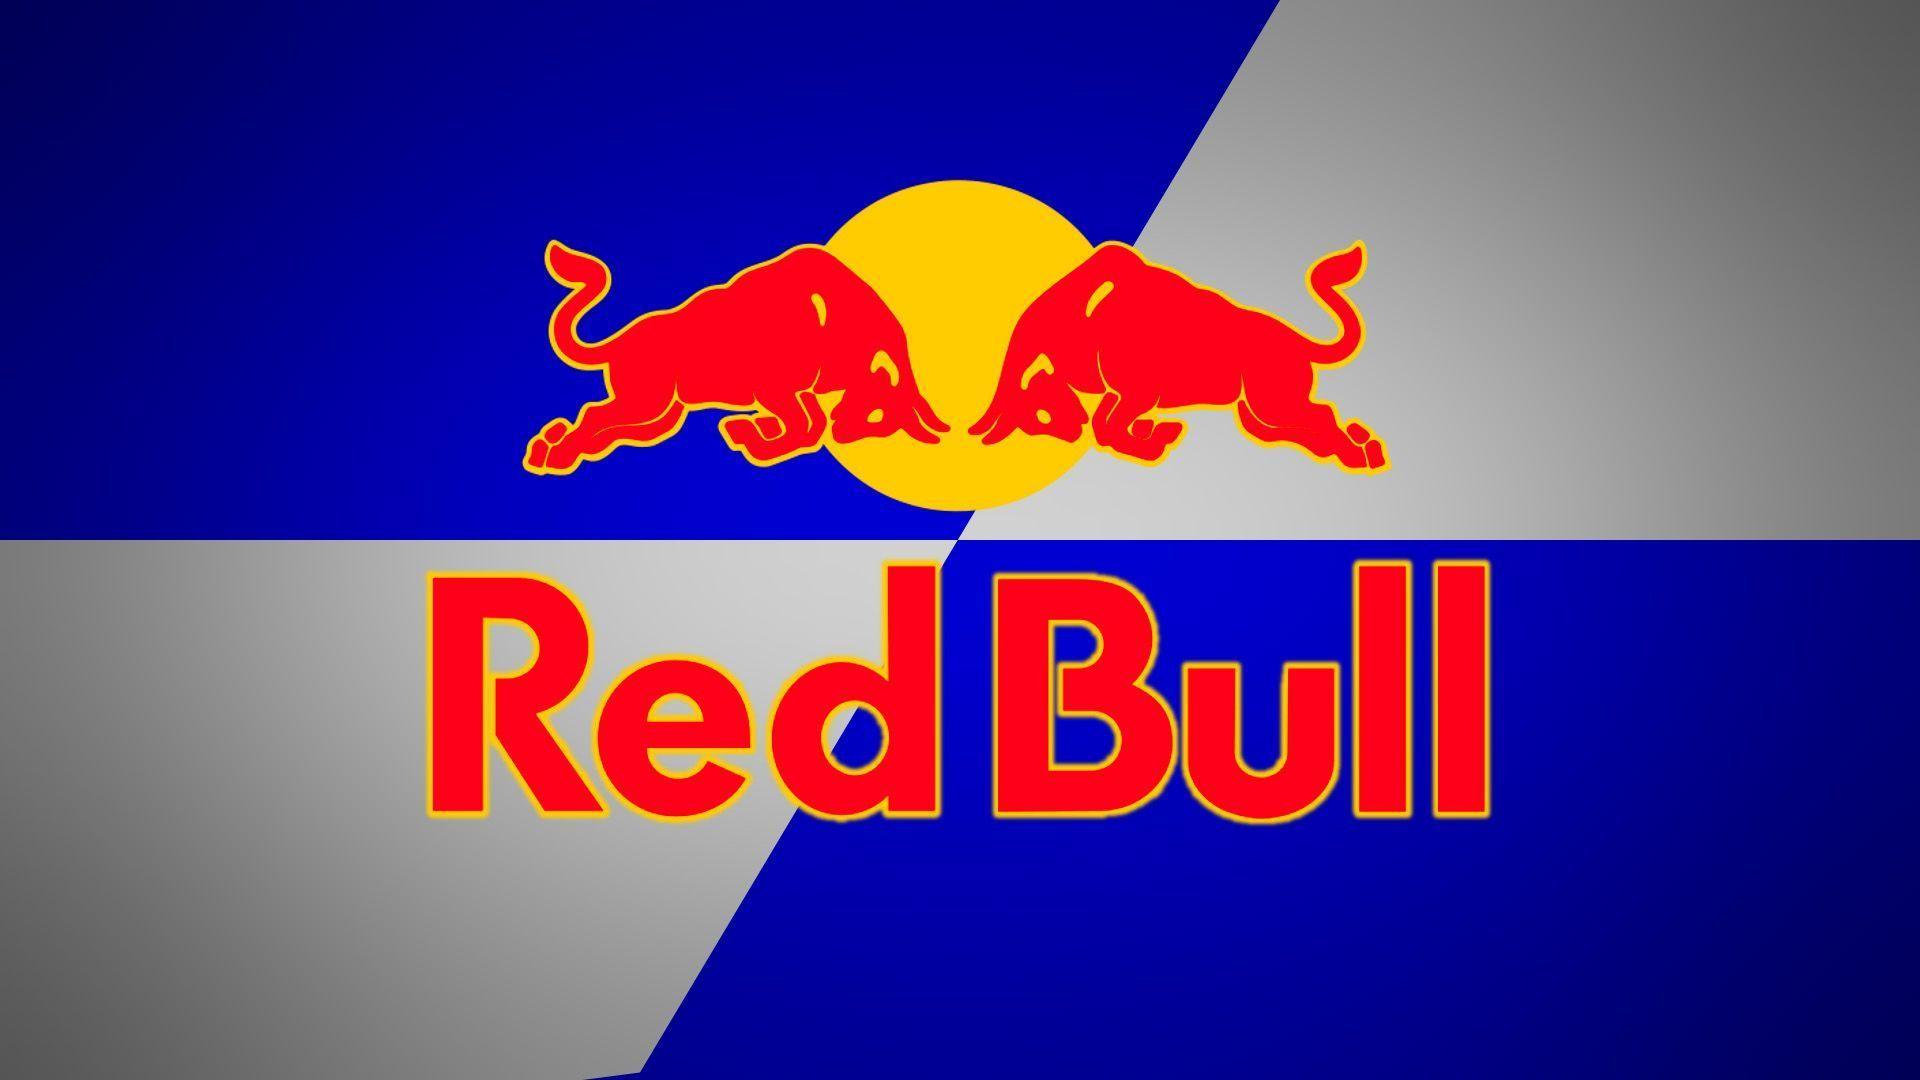  Red Bull Hintergrundbild 1920x1080. Red Bull Logo Wallpaper